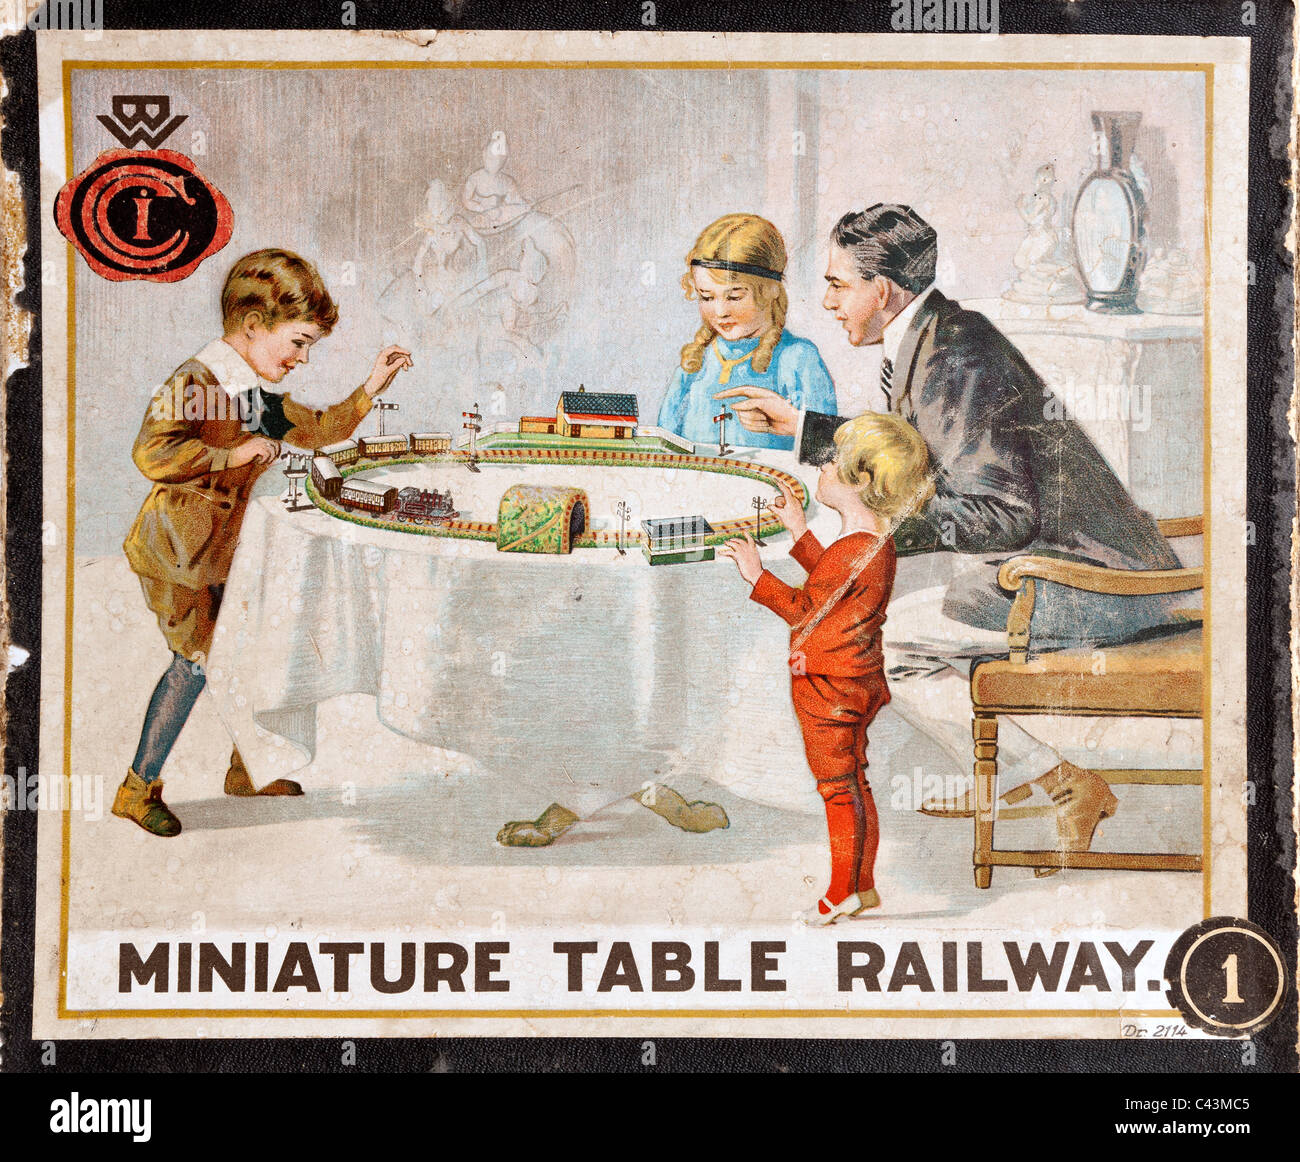 Box lid illustration from clockwork Bing Miniature Table Railway, world's first 00 gauge toy train set introduced 1922. JMH4940 Stock Photo